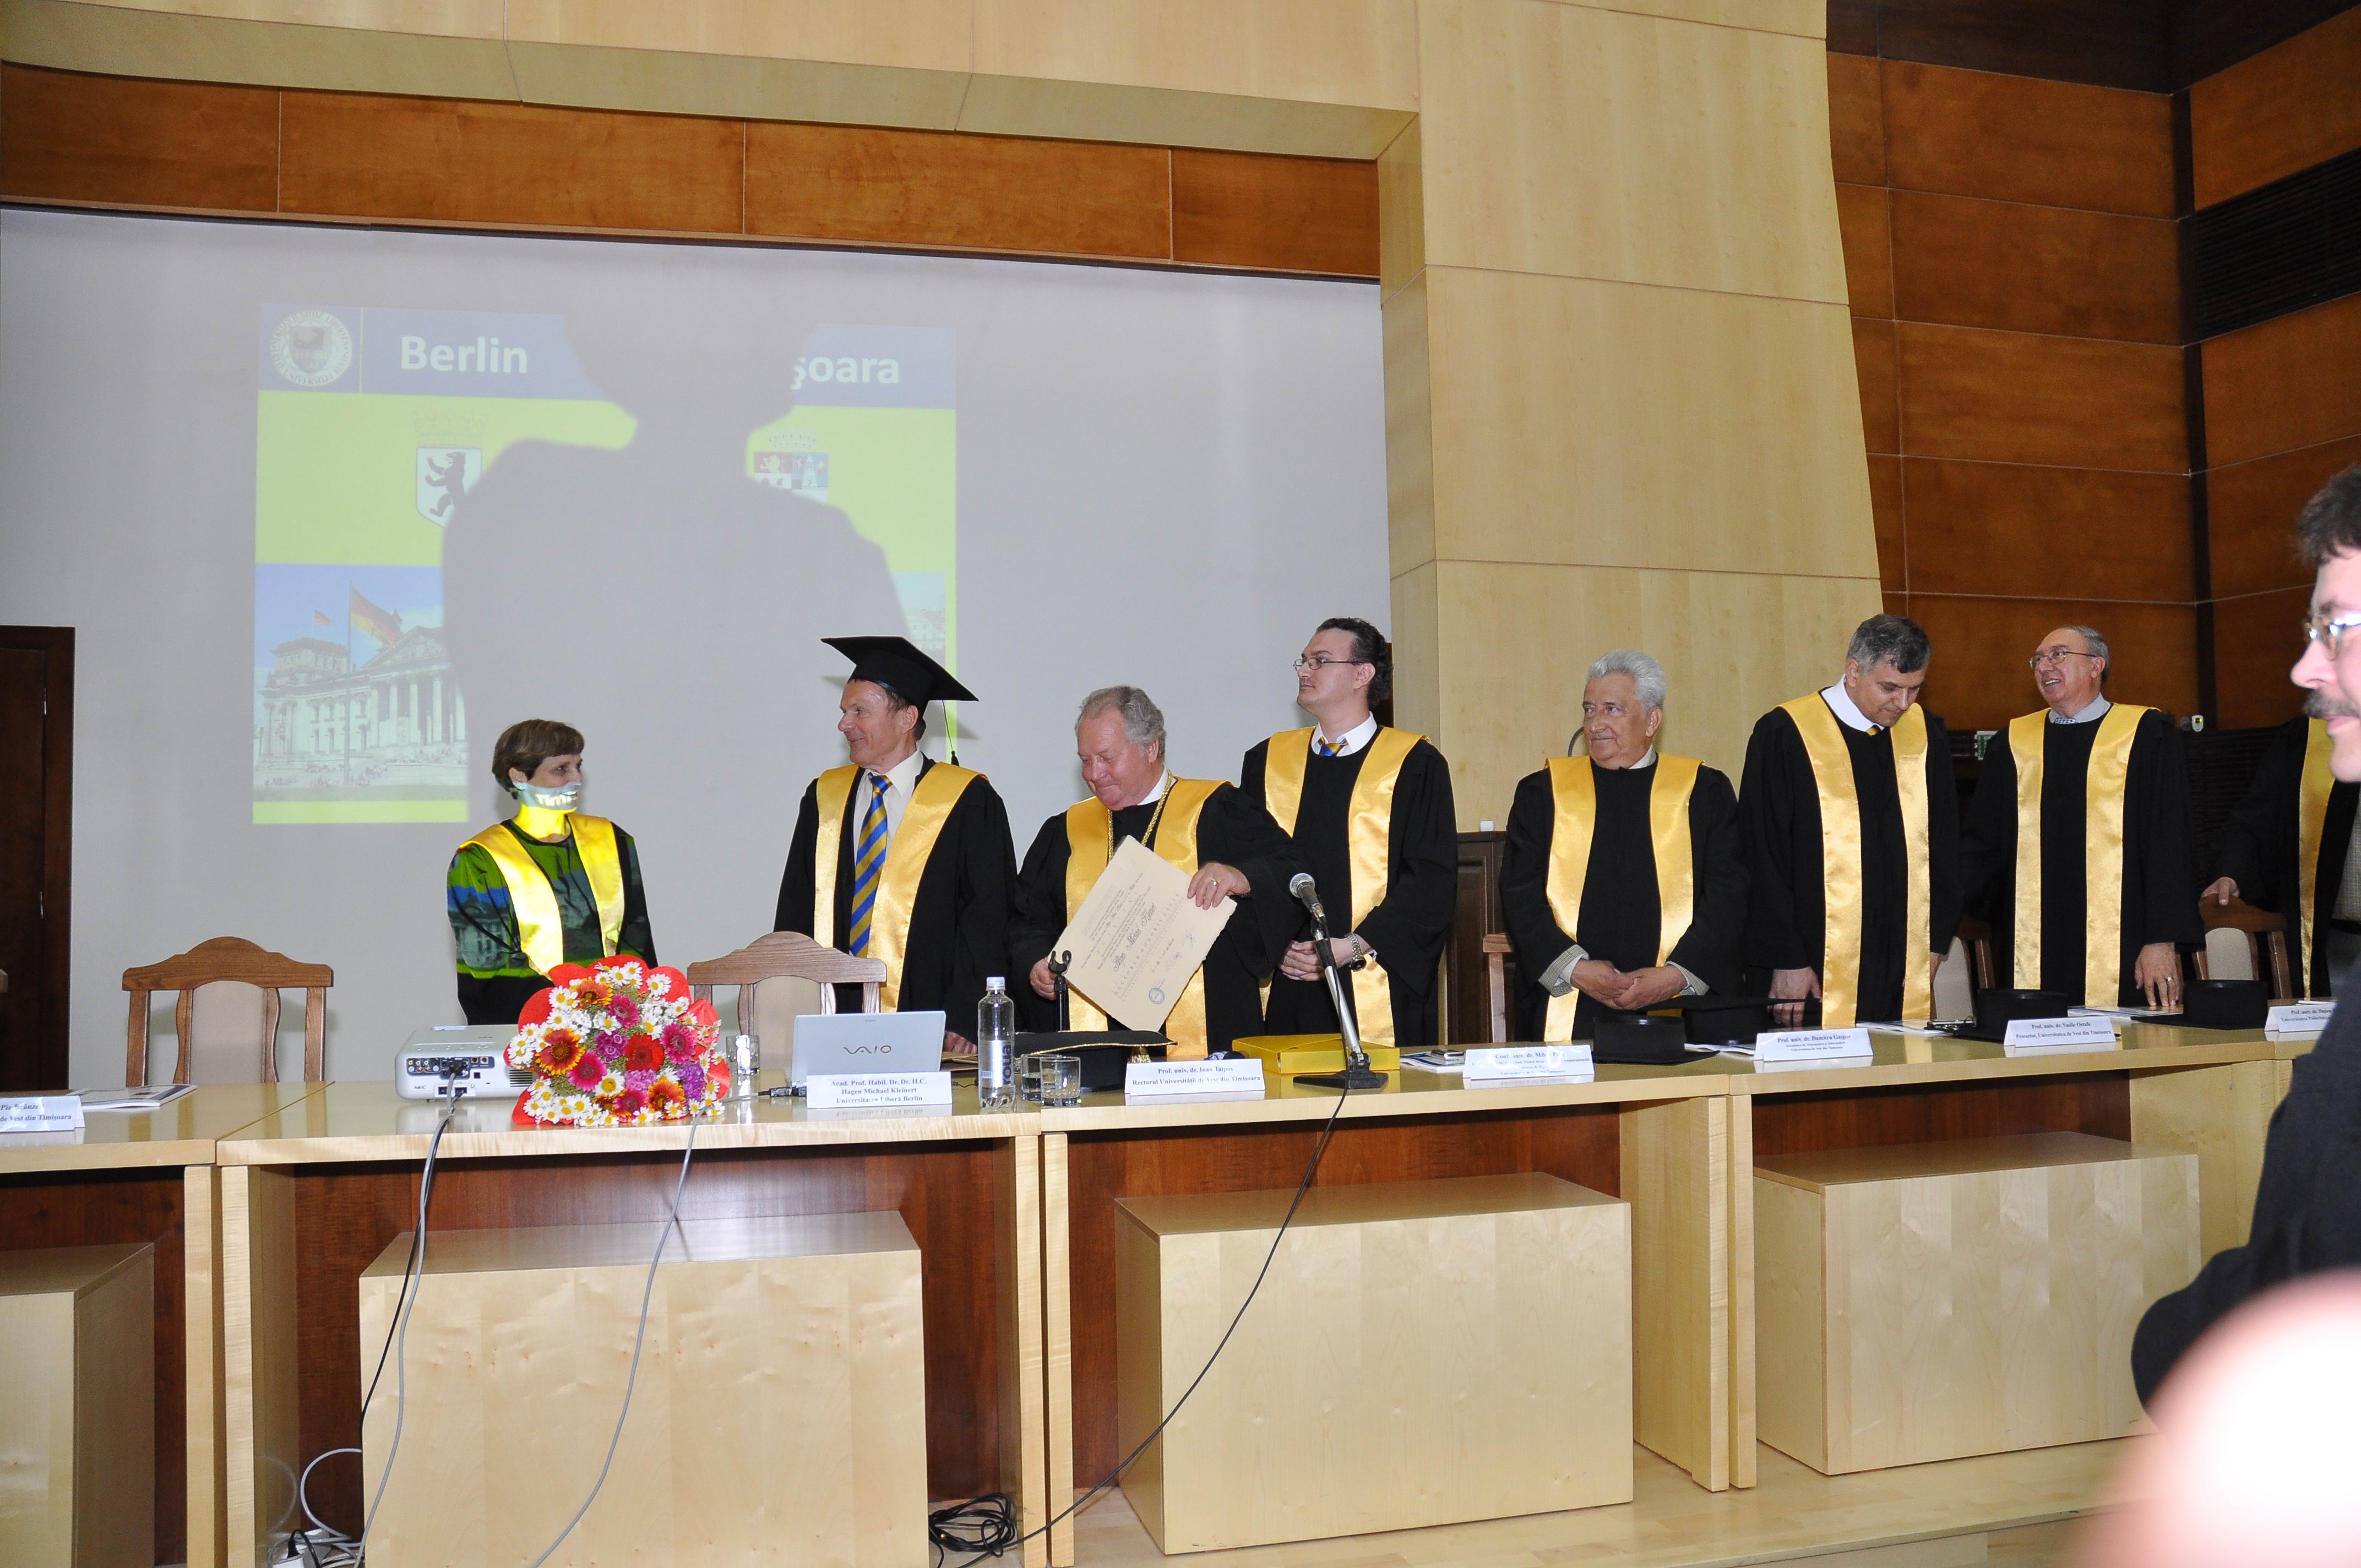 with Academic Senate of West University of Timisoara at Dr. h.c. -ceremony in Timisoara 2009